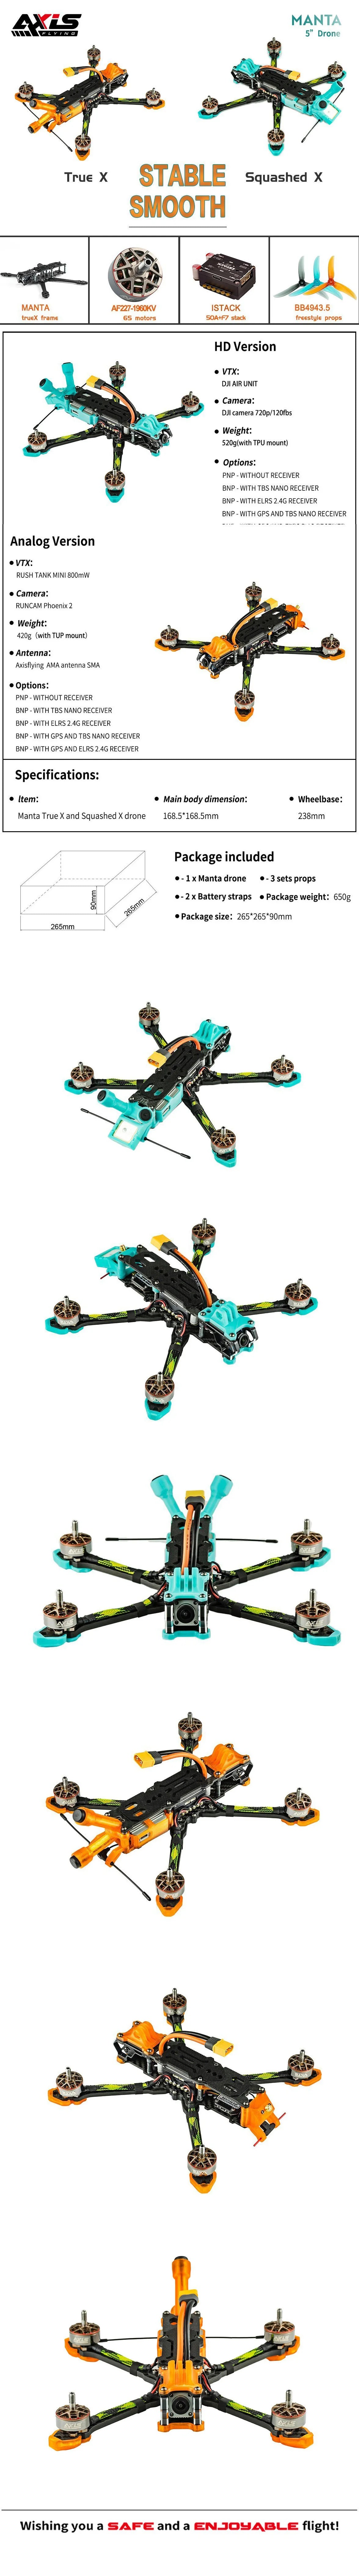 Axisflying MANTA5", Manta True Xand Squashed drone 168.5*168.5mm 238